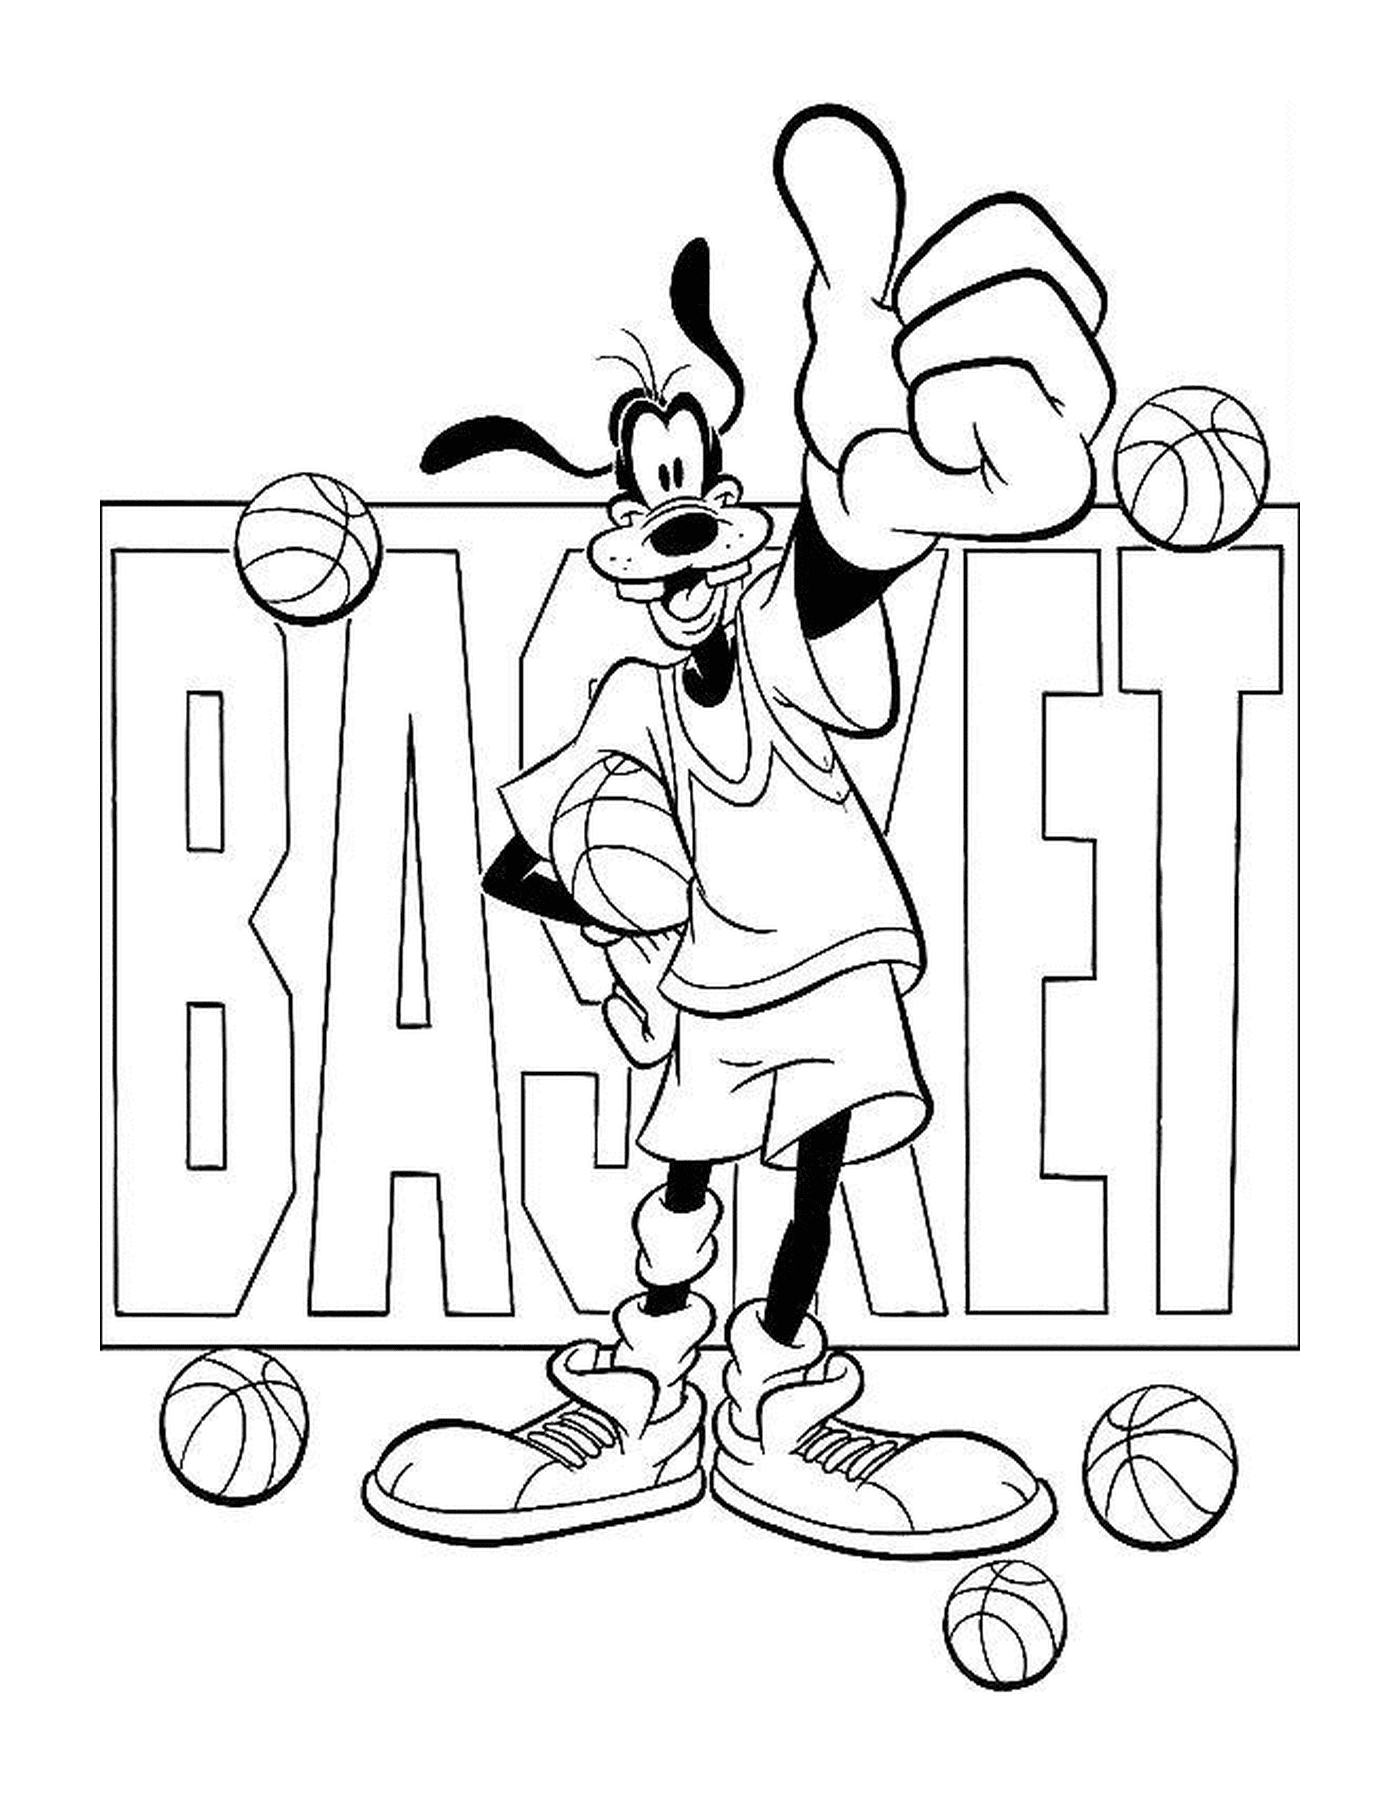  Dingo ama il basket e tiene una palla davanti al basket parola 